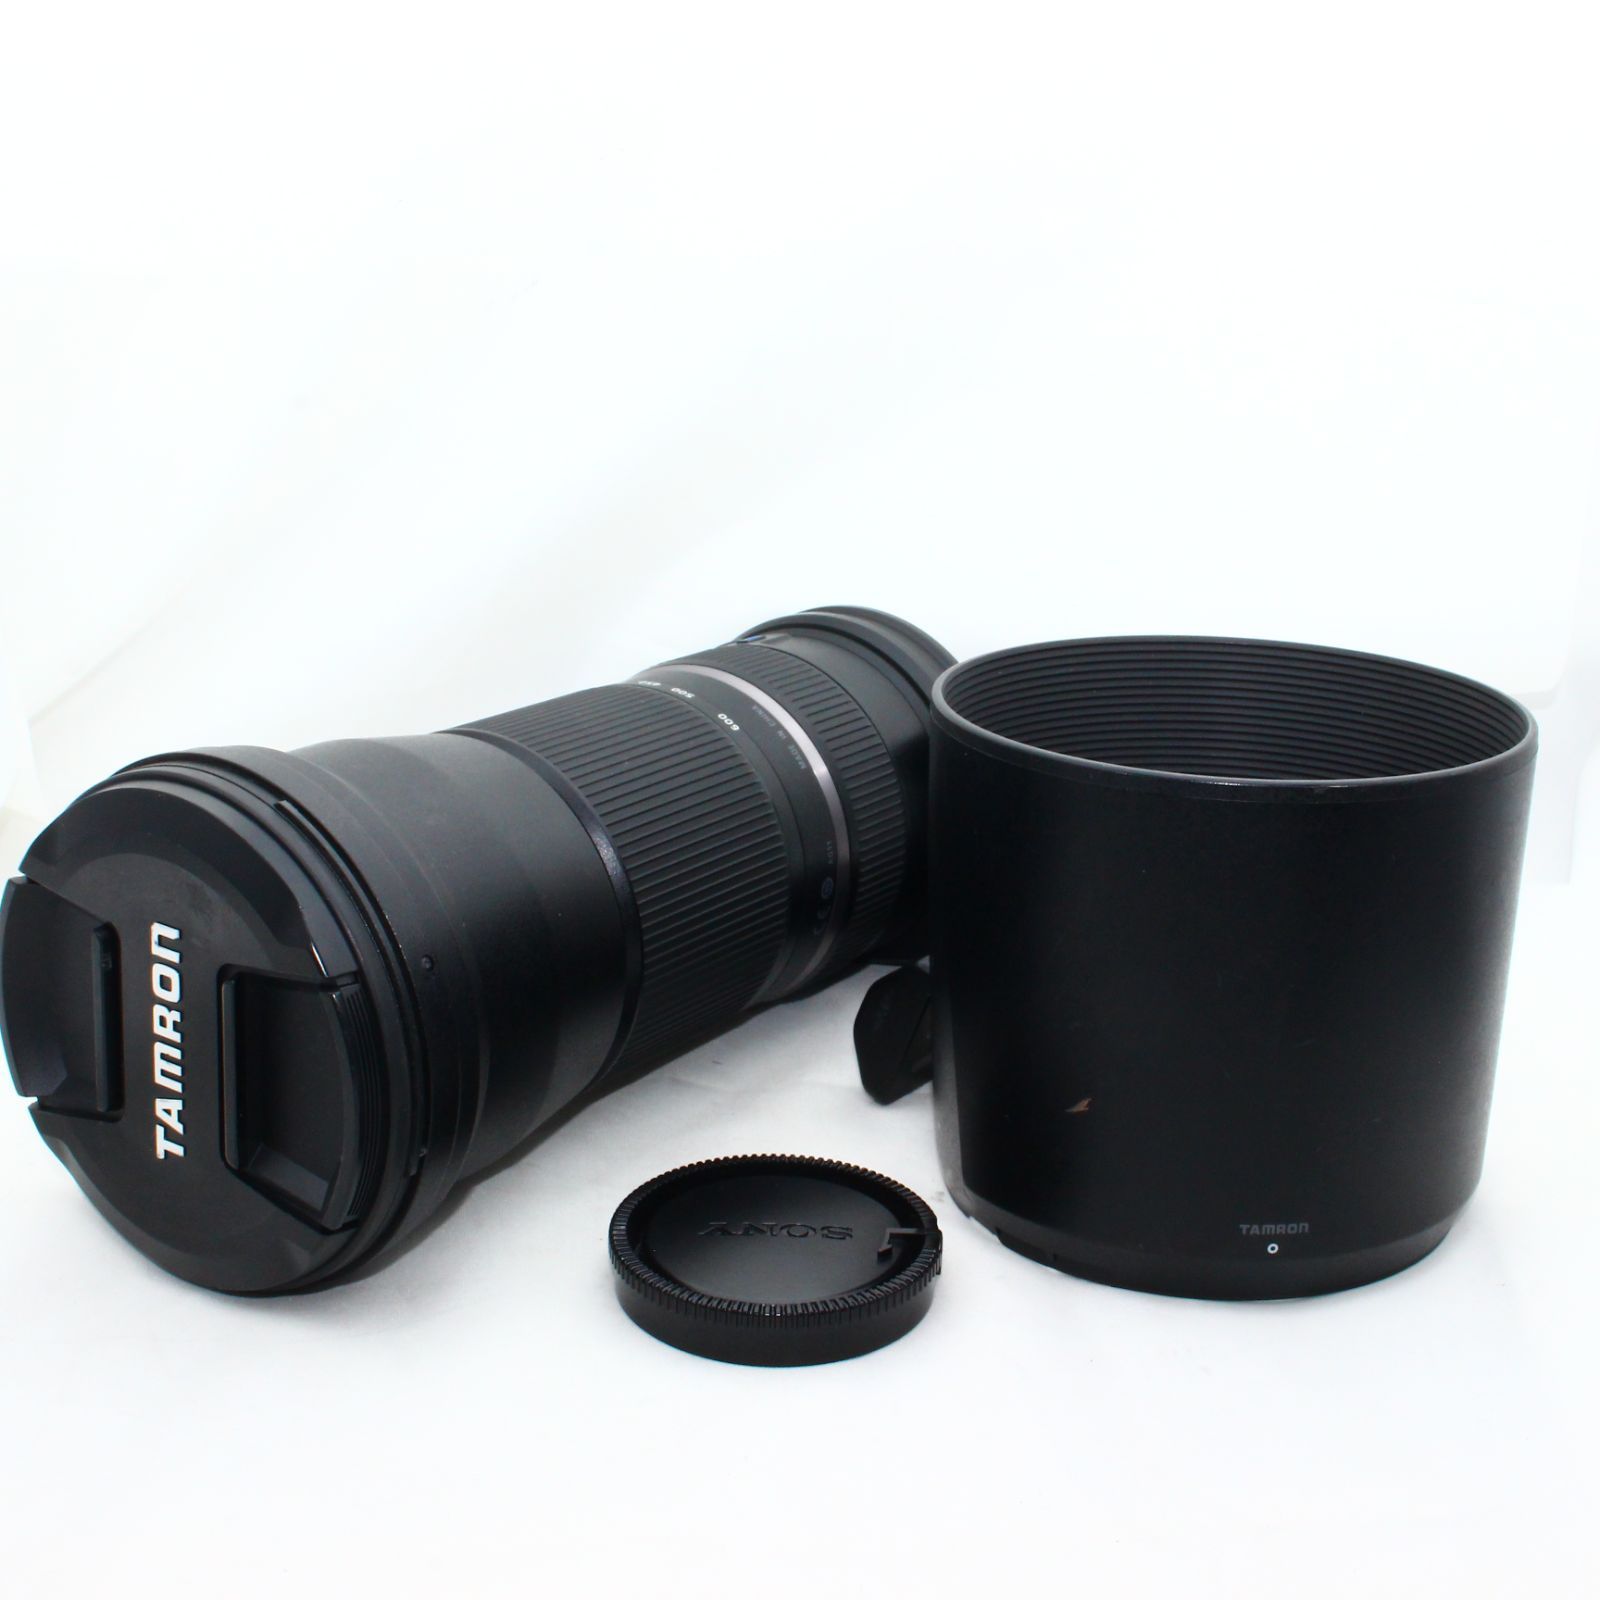 TAMRON 超望遠ズームレンズ SP 150-600mm F5-6.3 Di USD ソニーAマウント用 フルサイズ対応 A011S